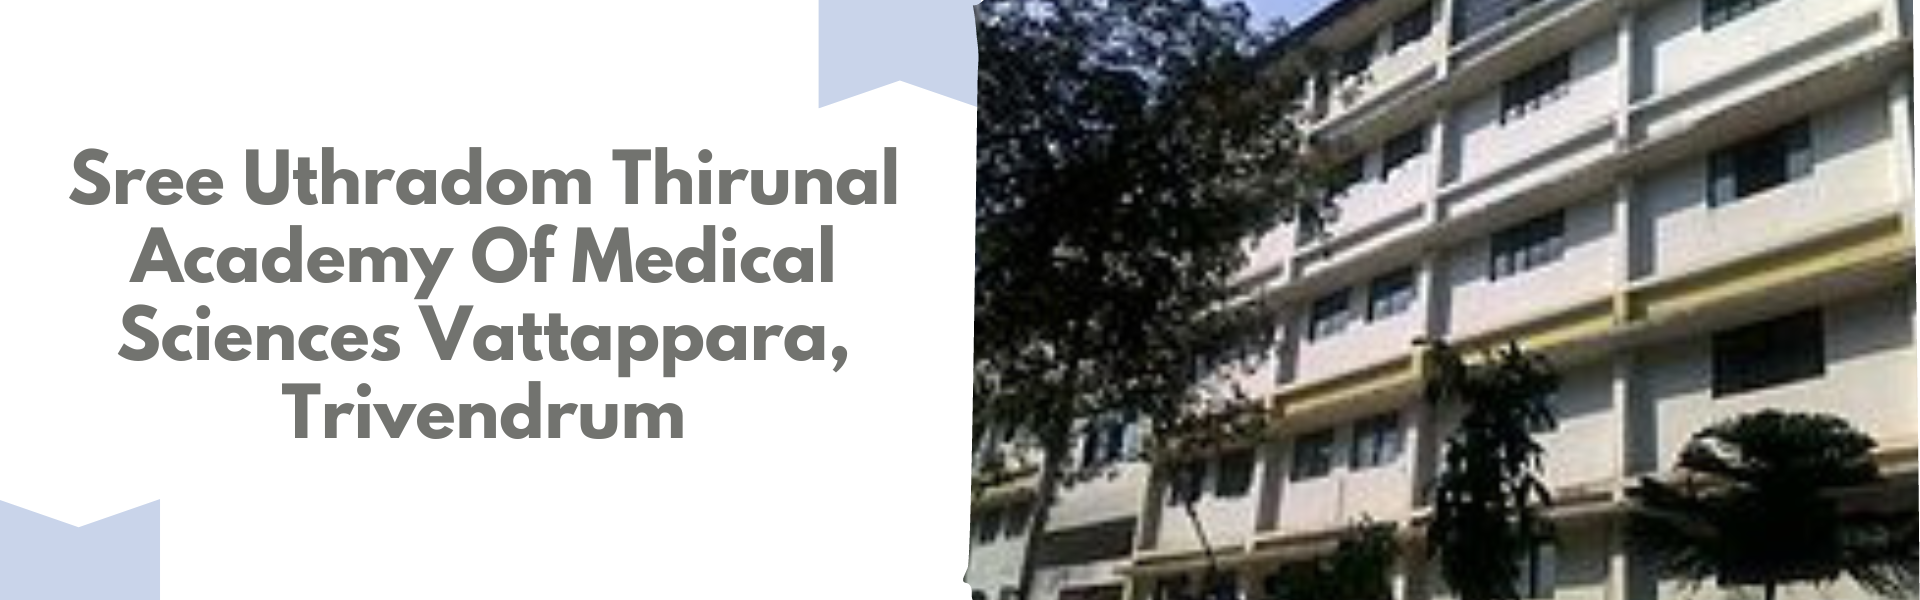 Sree Uthradom Thirunal Academy Of Medical Sciences Vattappara, Trivendrum